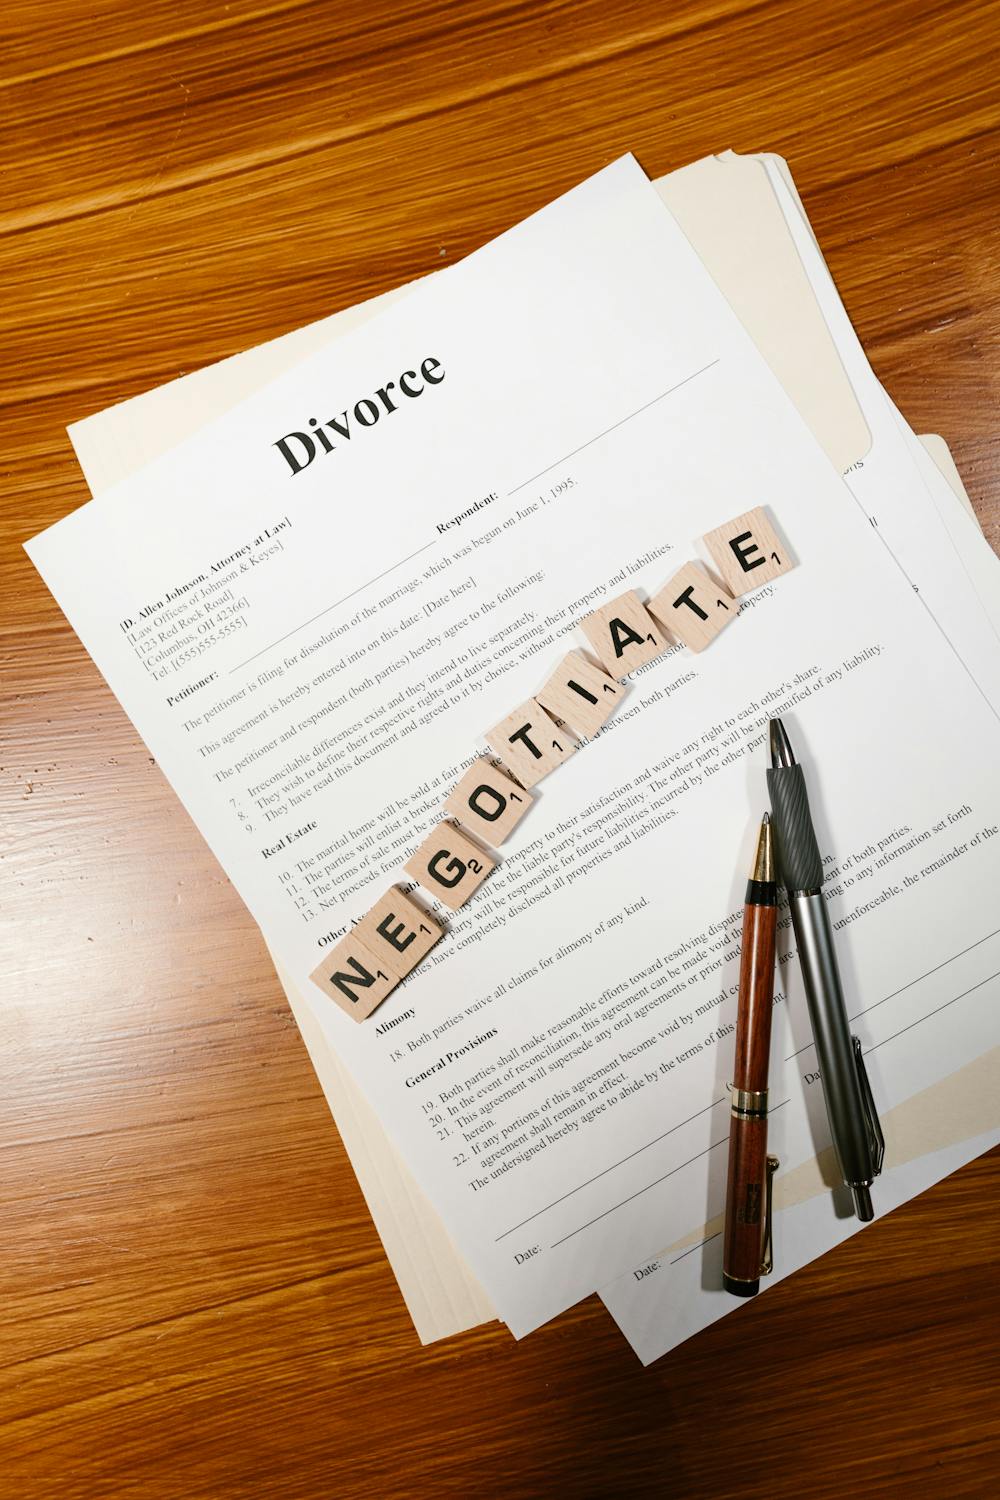 Tiles spelling negotiate on divorce papers